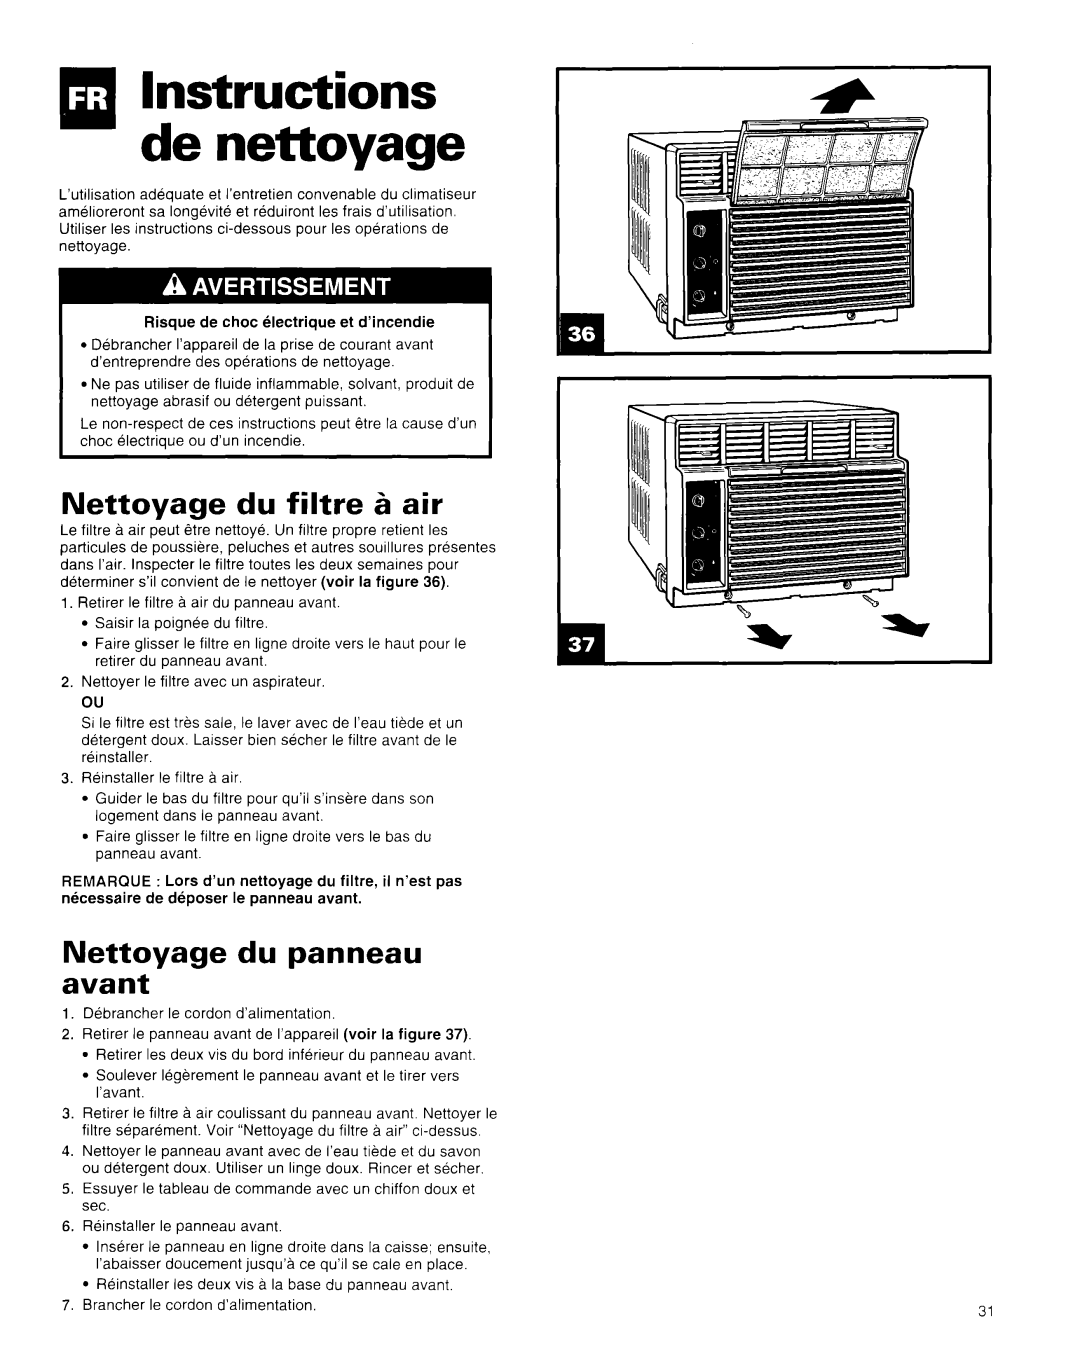 Whirlpool AR1800XA0 manual q. Instructions de nettoage, Nettoyage du filtre 5 air, Nettoyage du panneau avant 